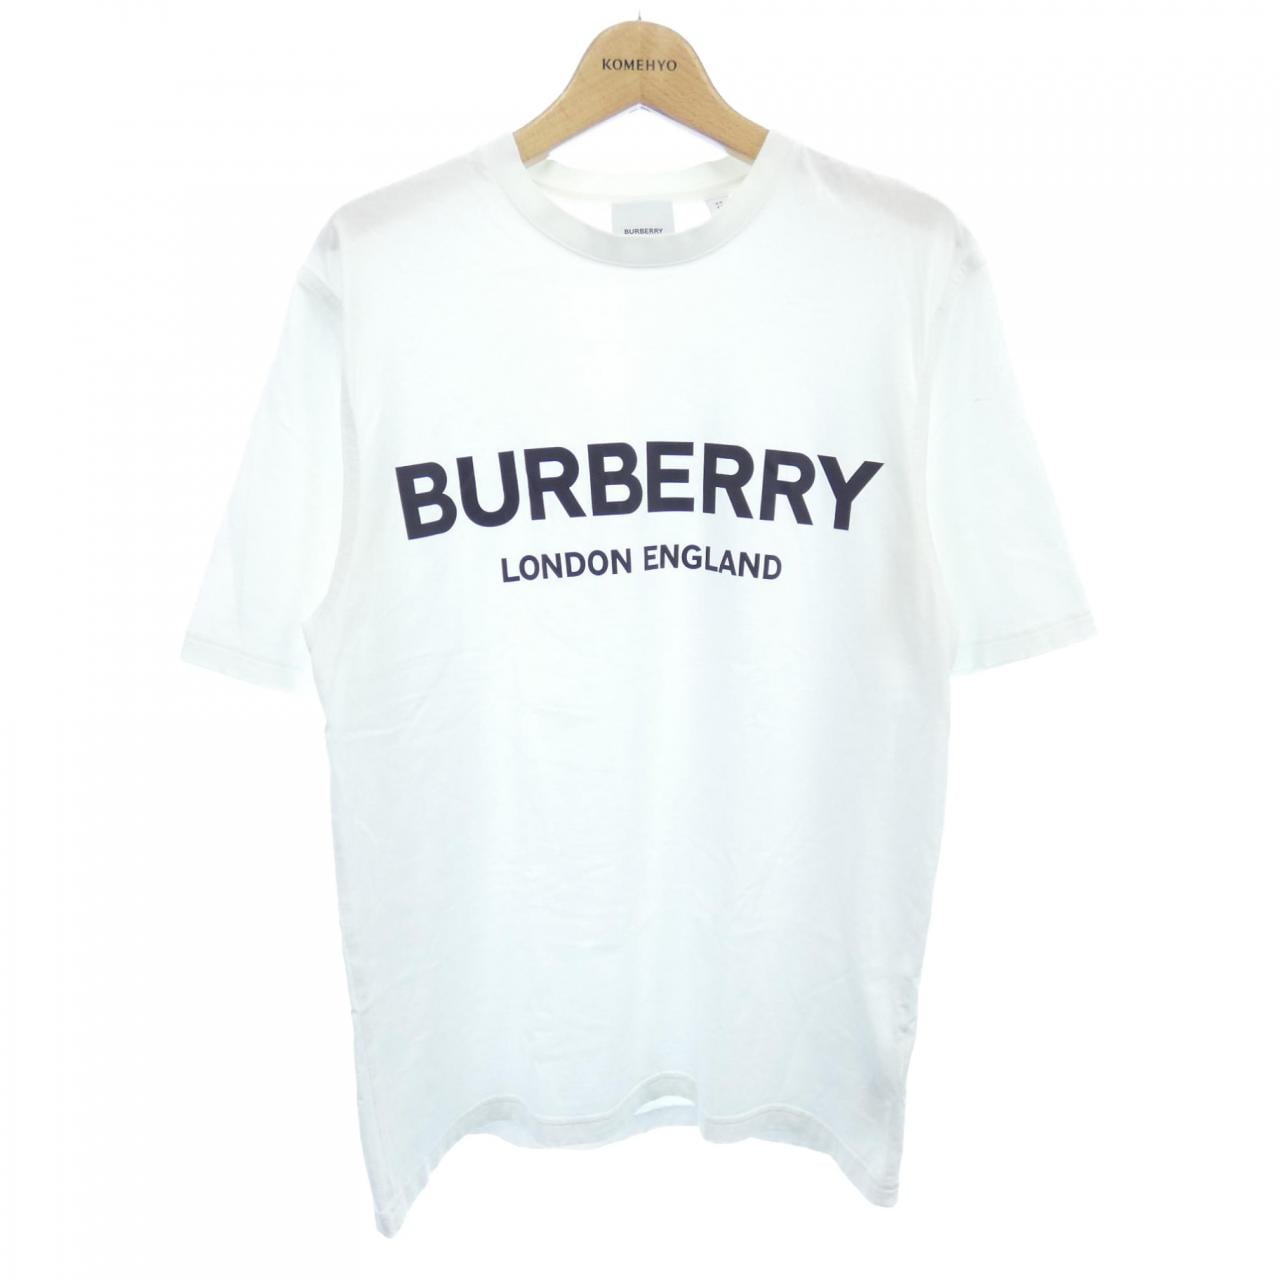 BURBERRY巴宝莉T恤